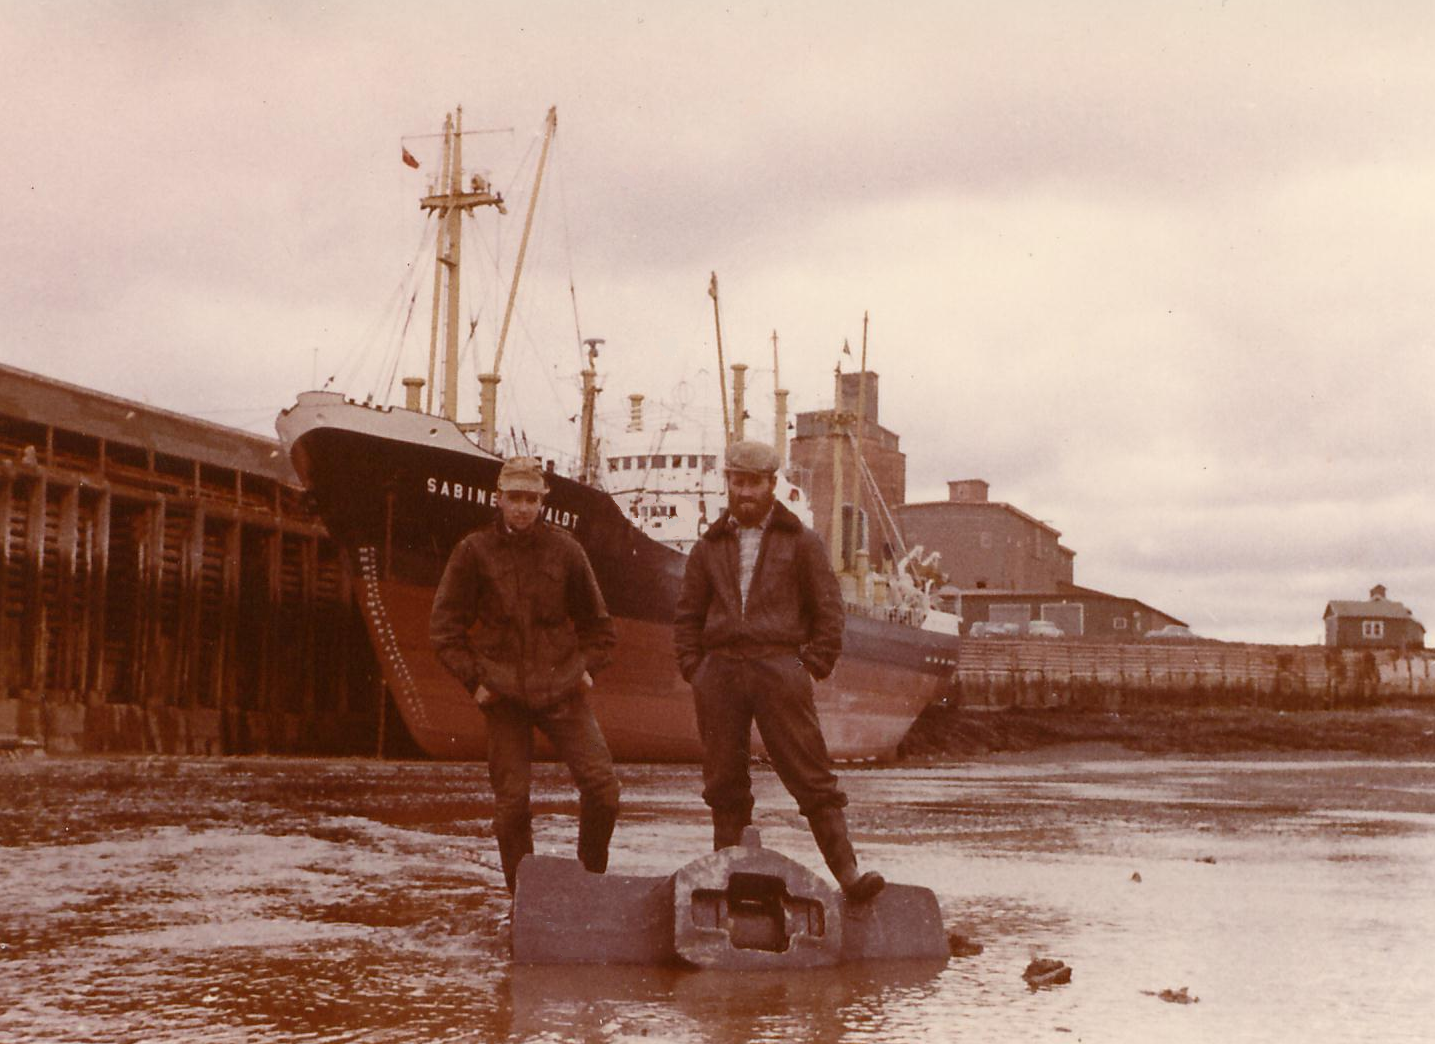 The_German_cargo_ship_Sabine_Howaldt_in_the_tidal_harbor_from_Walton%2C_Nova_Scotia%2C_Canada_-_1958.png